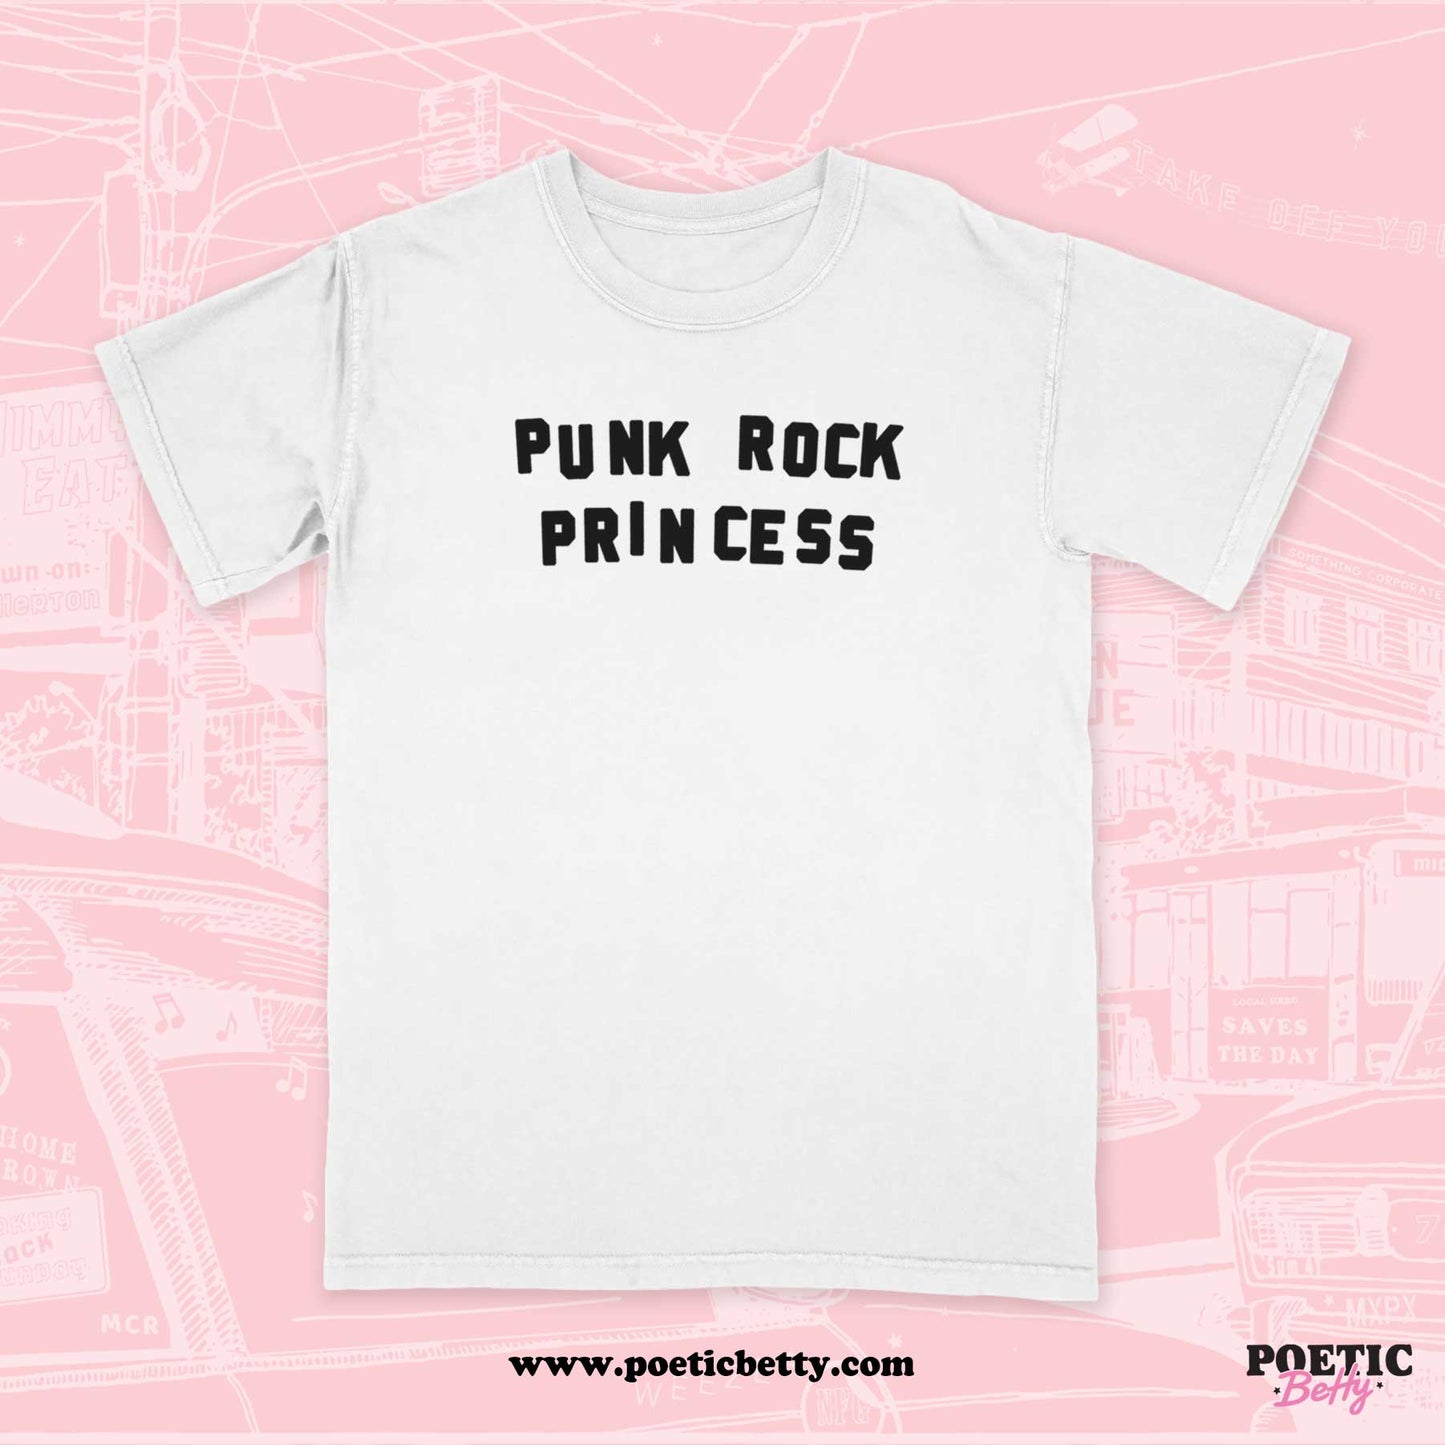 Pop Punk Duo Garage Band King Punk Rock Princess Unisex T-Shirt